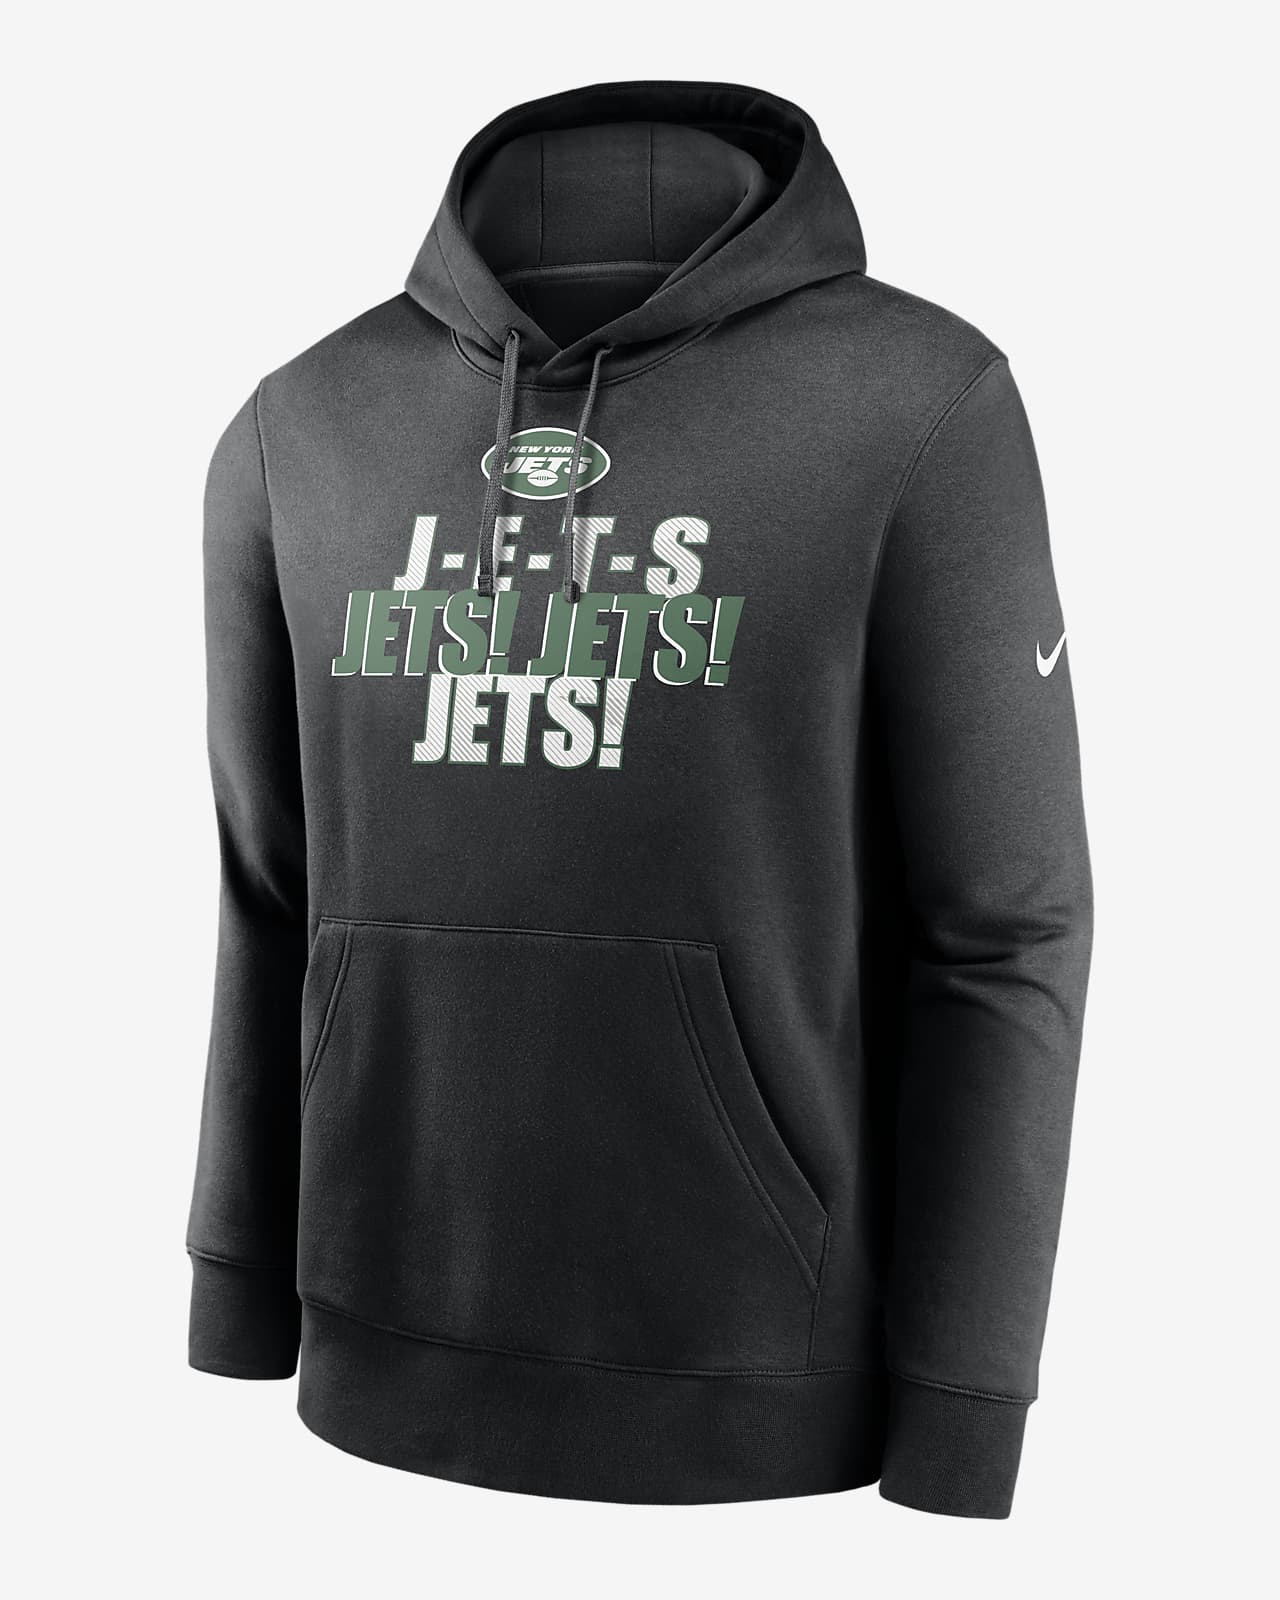 Download Nike Club Fleece (NFL Jets) Men's Pullover Hoodie. Nike.com